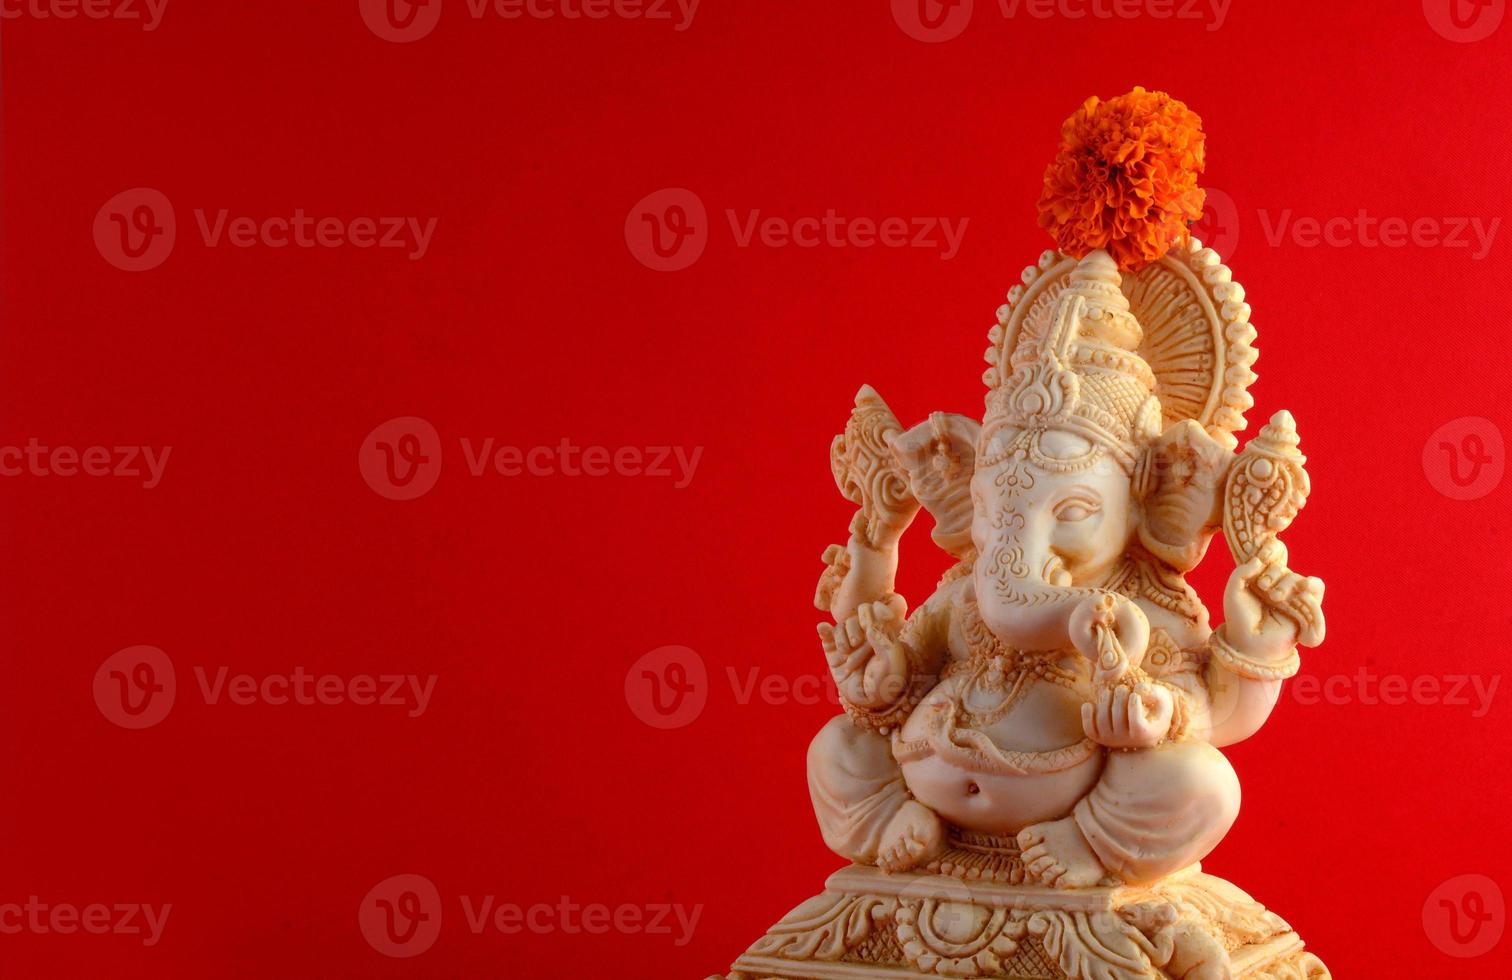 dieu hindou ganesha. idole de ganesha sur fond rouge photo